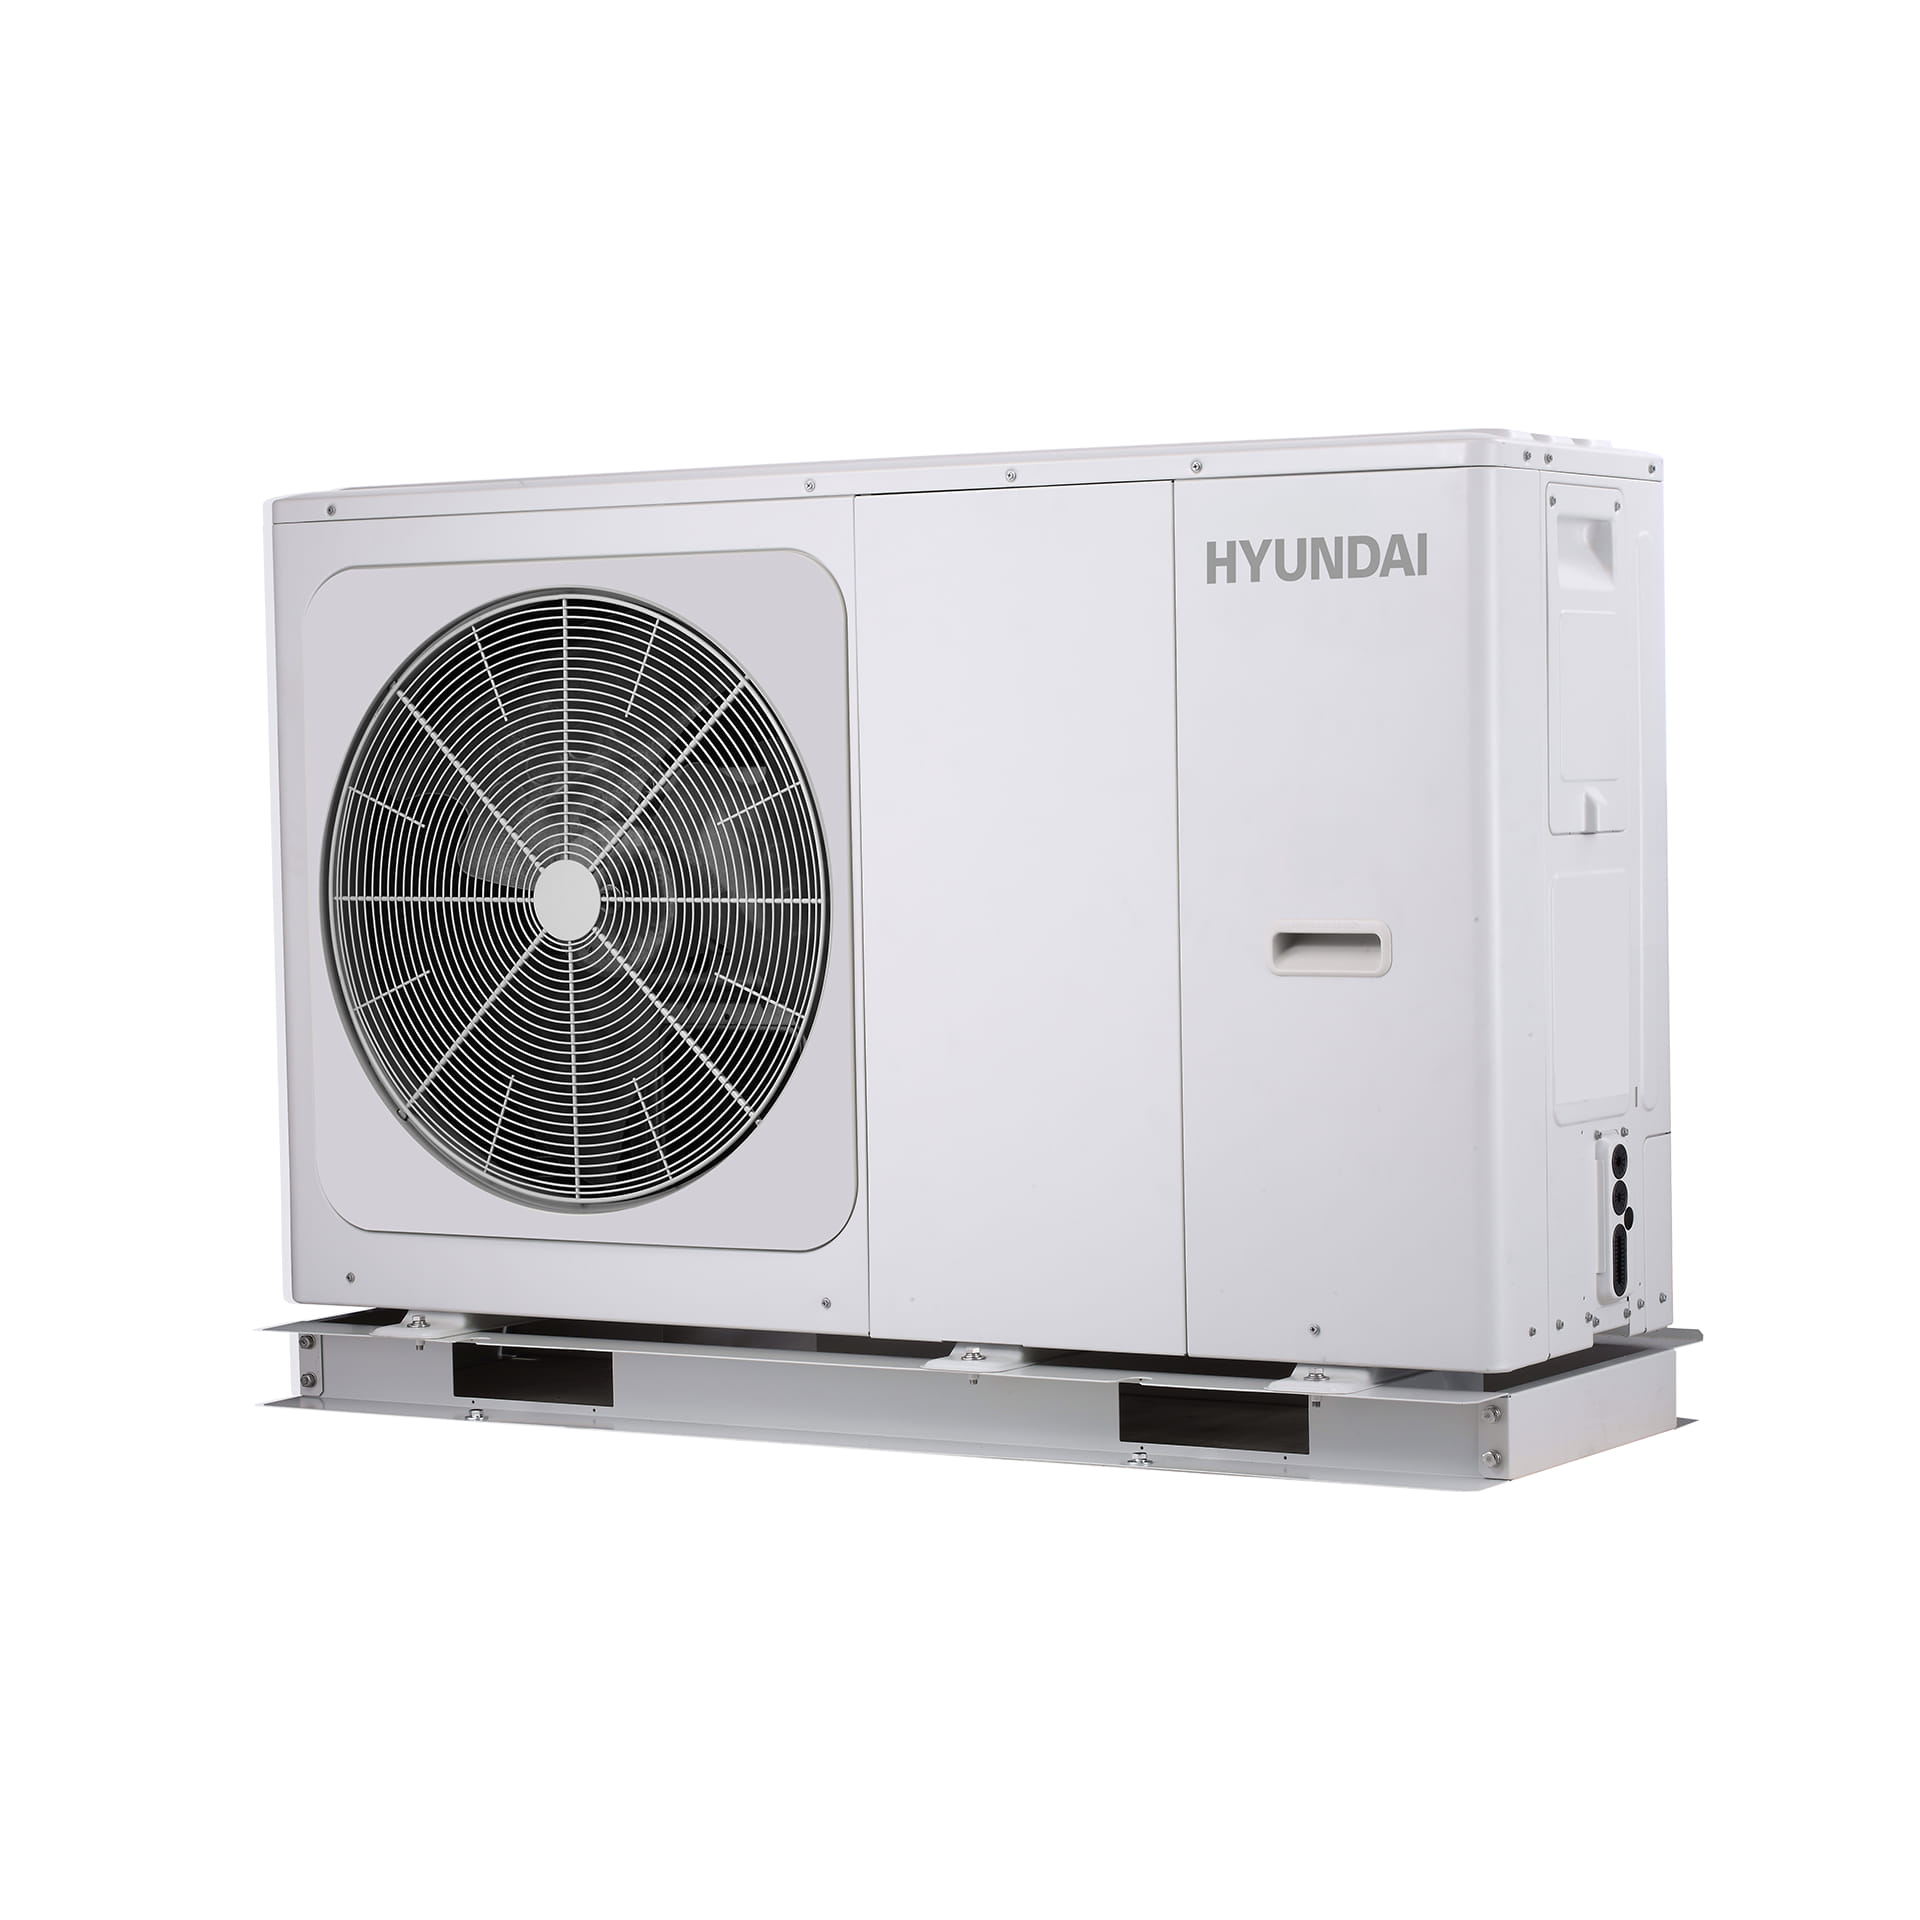 HYUNDAI MONOBLOCK HHPMM6TH1PH 1F 5,50kW heat pump